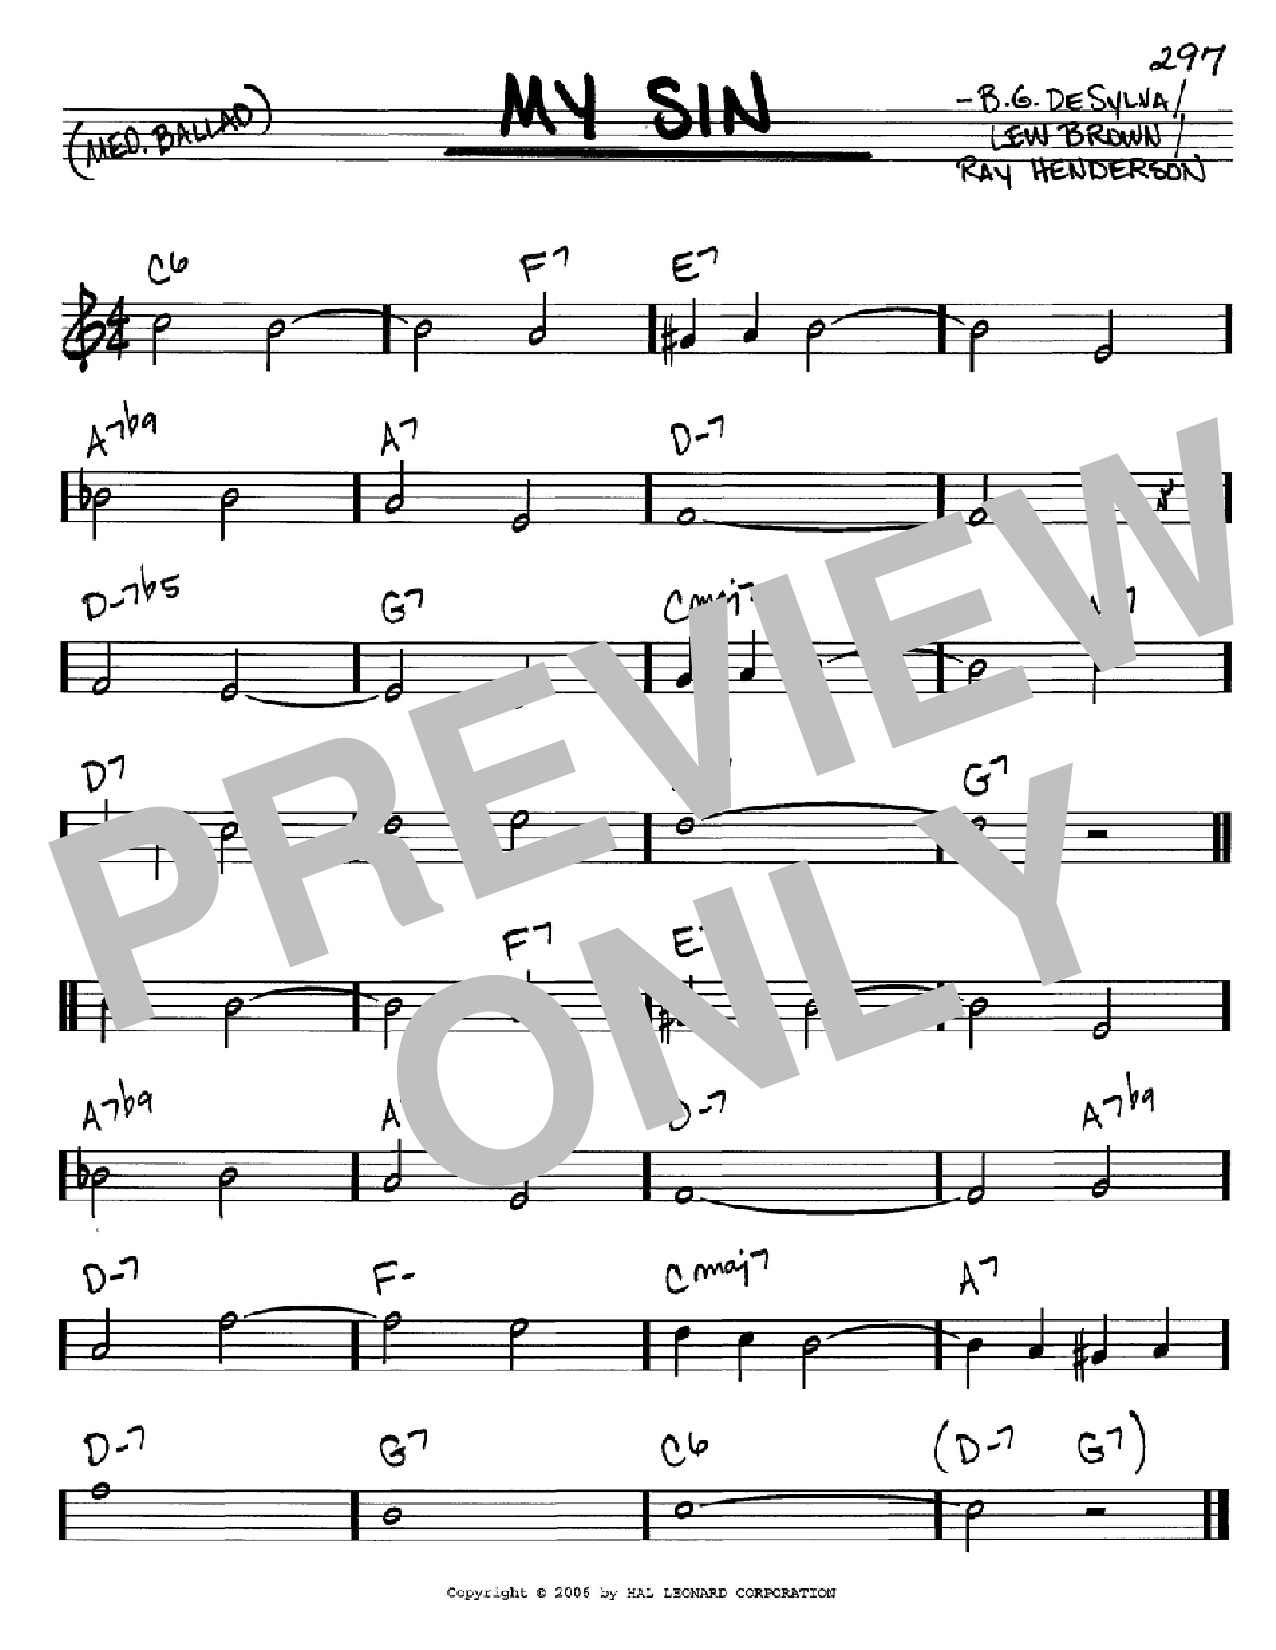 B.G. DeSylva My Sin Sheet Music Notes & Chords for Real Book - Melody, Lyrics & Chords - C Instruments - Download or Print PDF